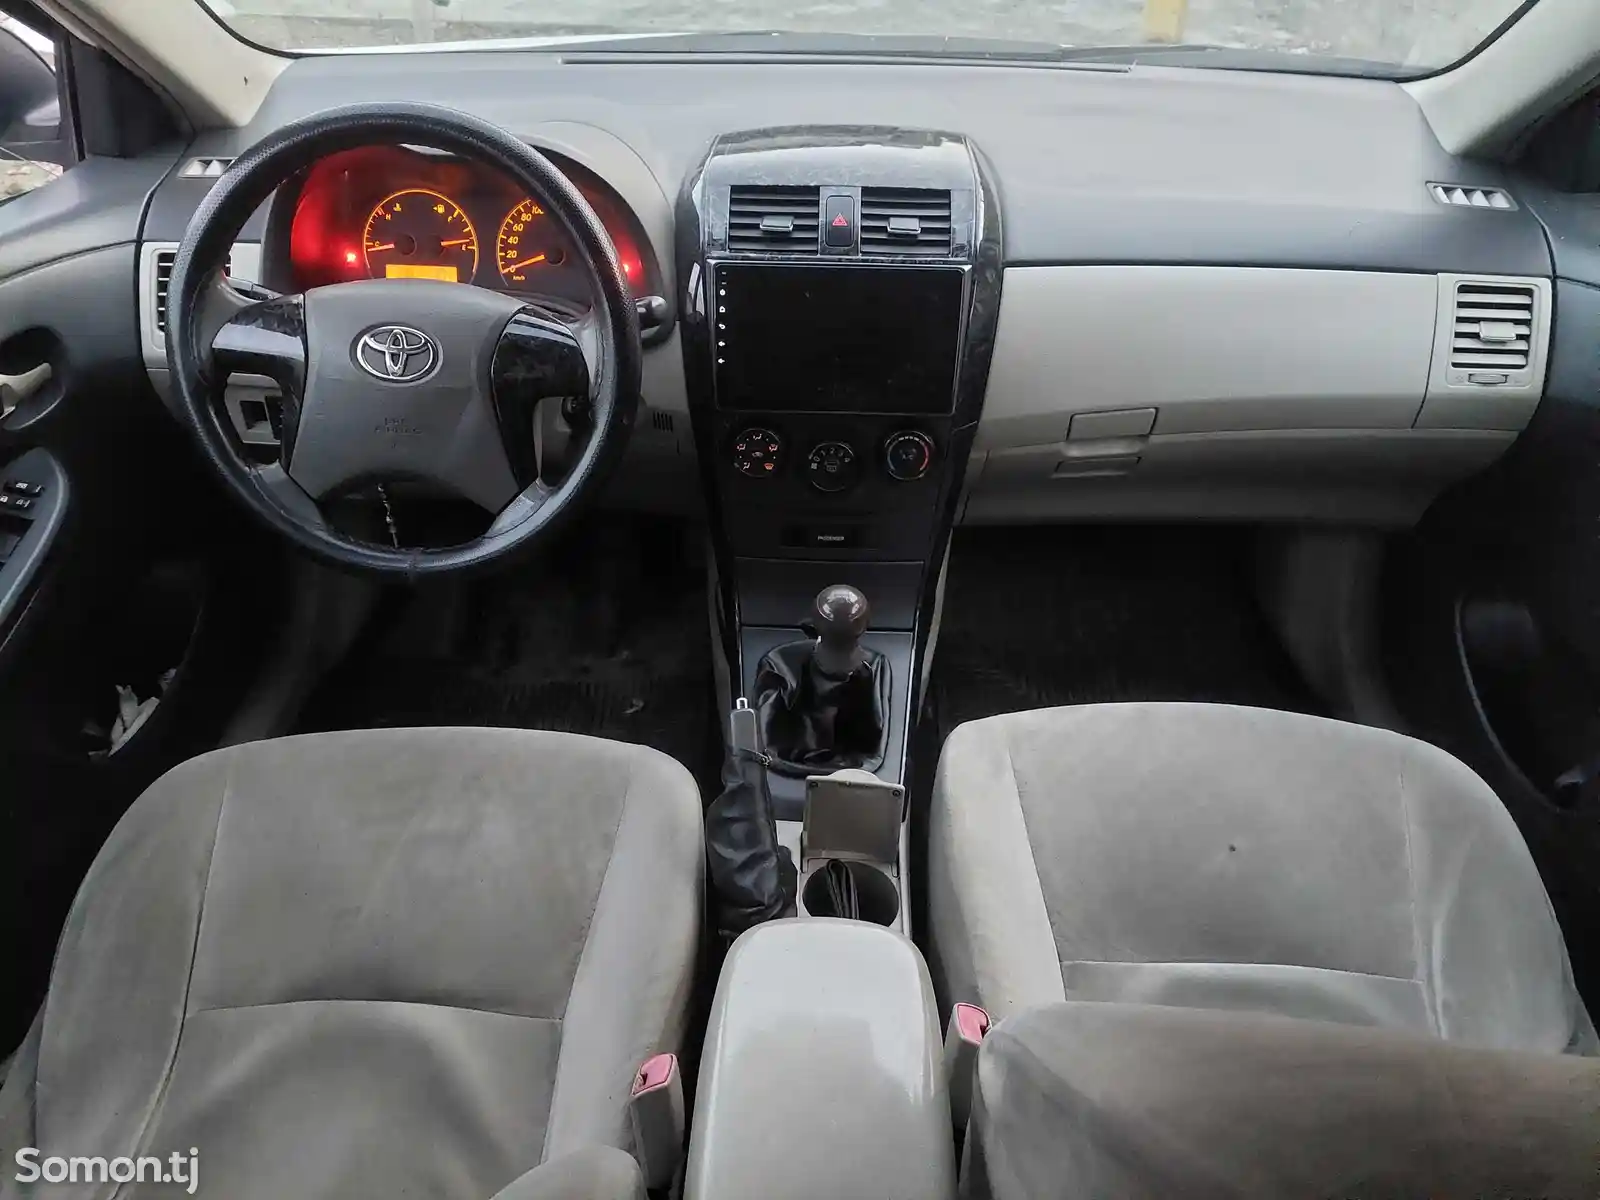 Toyota Corolla, 2009-2